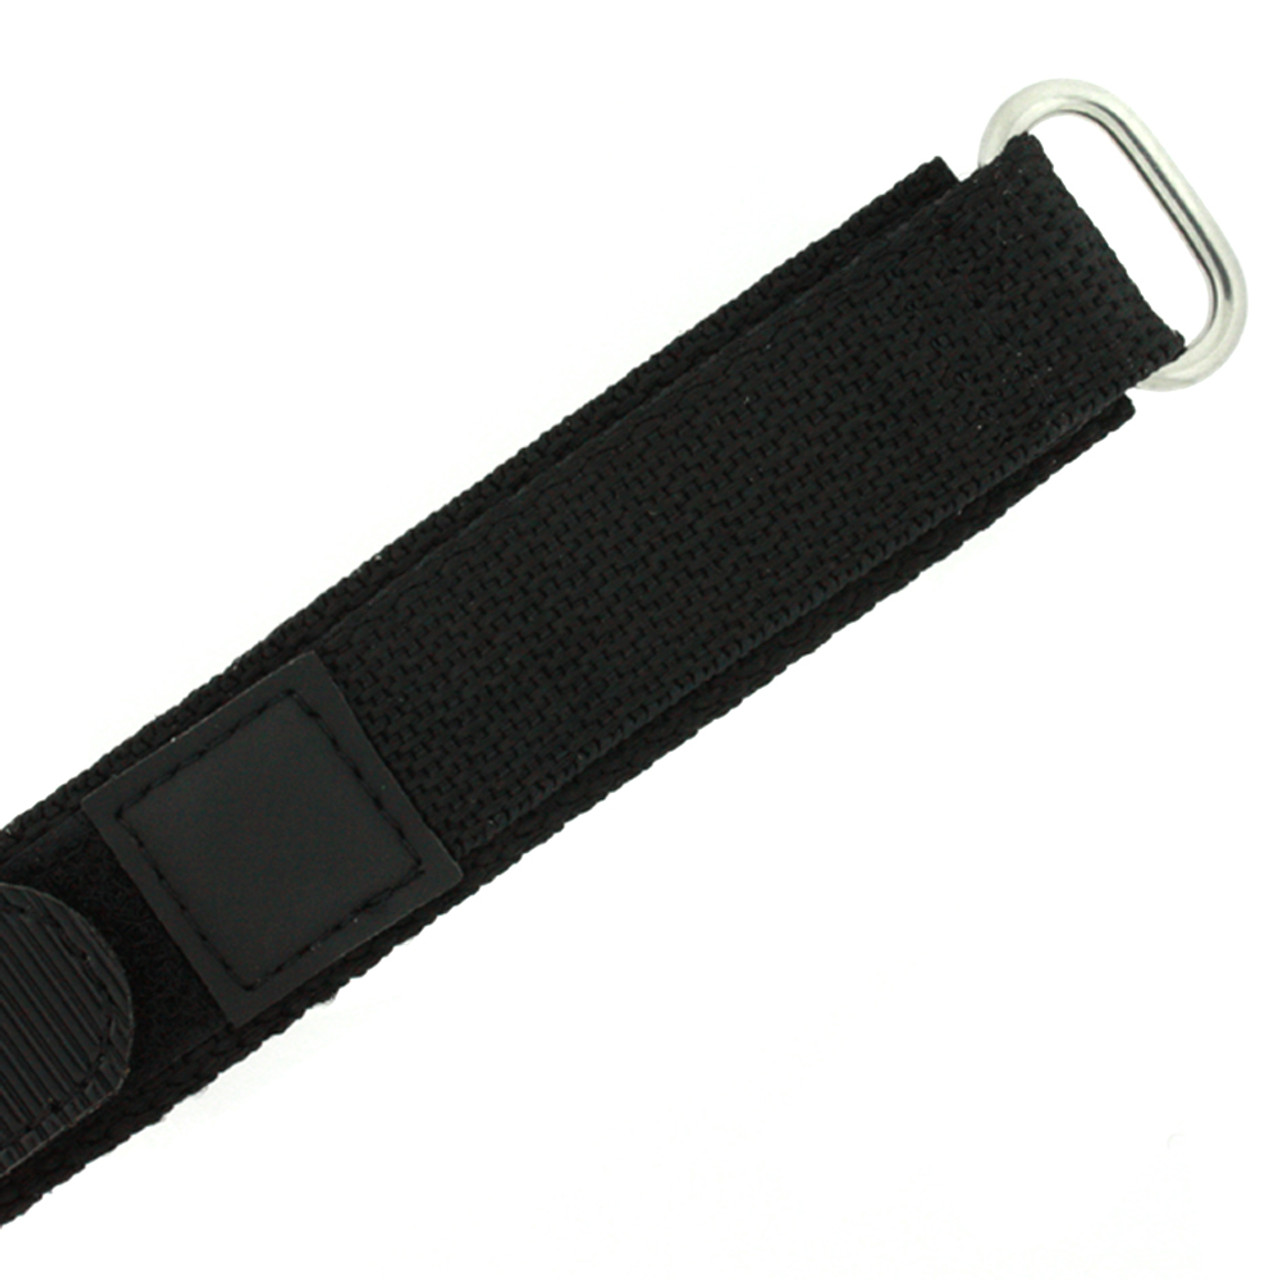 18mm Black Watch Band 18mm Black Watch Strap 18mm Sport Black Watch Band Watch Material VEL100BLK-18mm Stainless Steel Loop